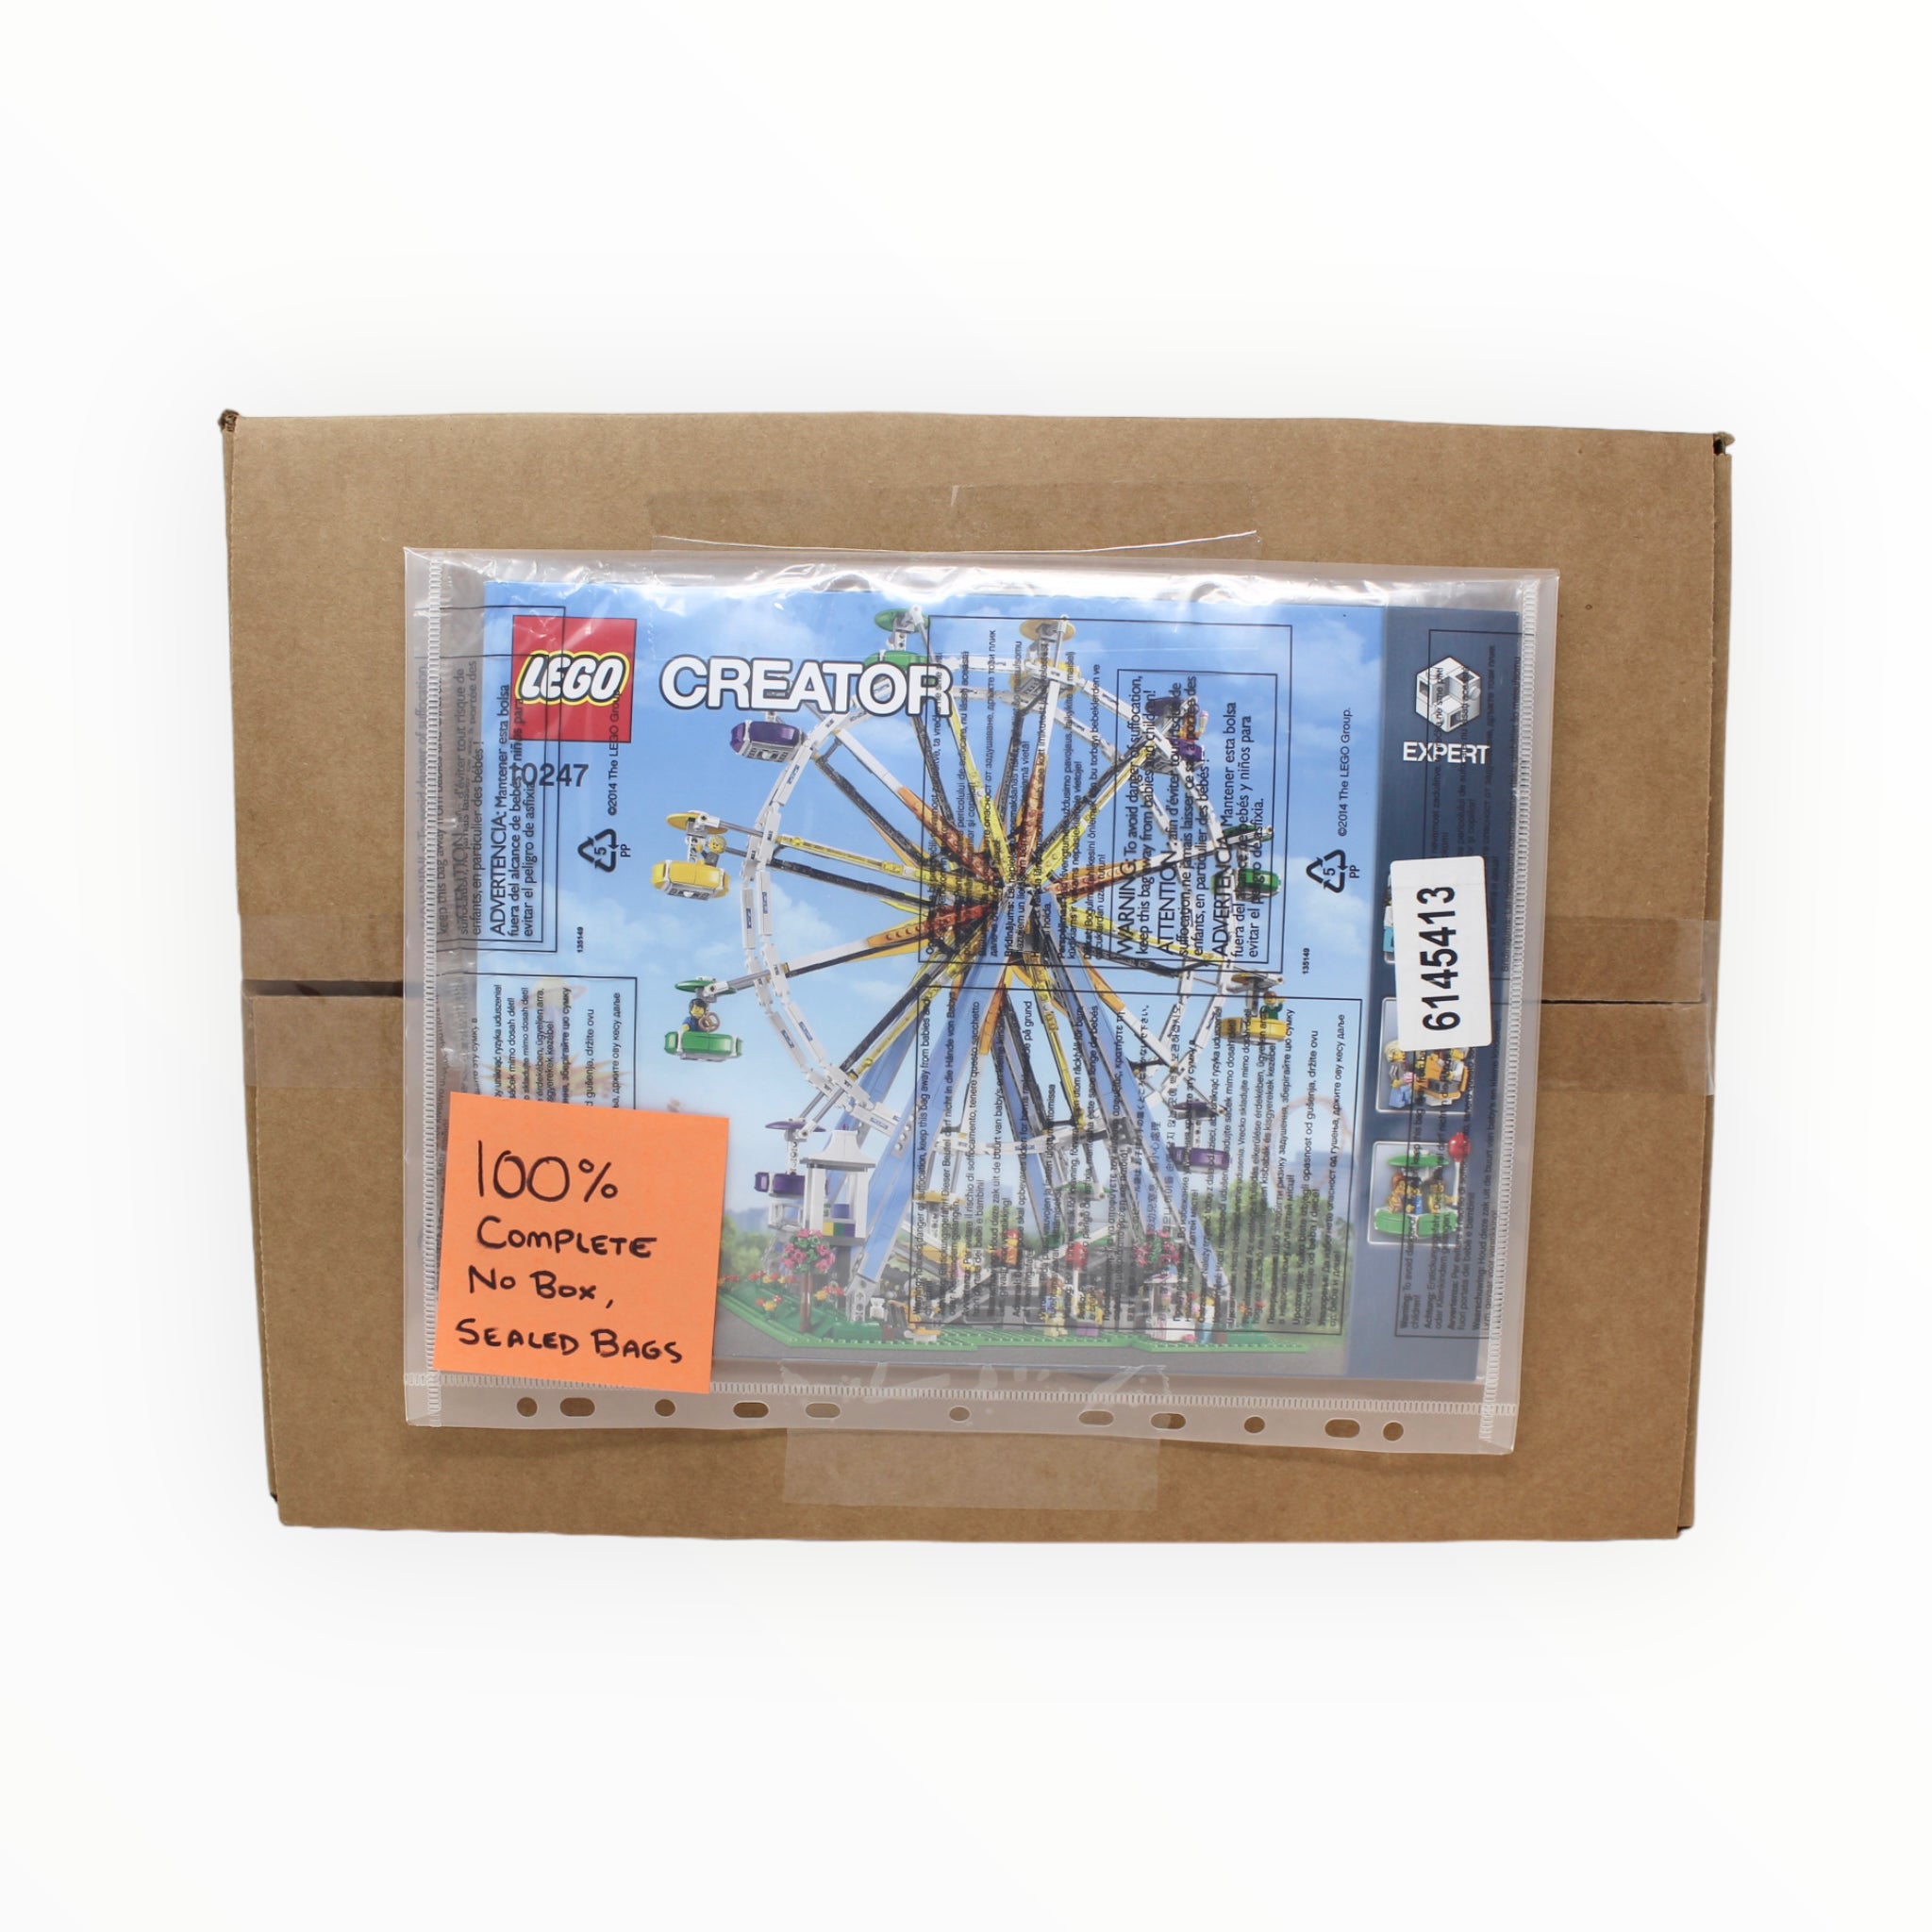 Certified Used Set 10247 Creator Ferris Wheel (no box, sealed bags)